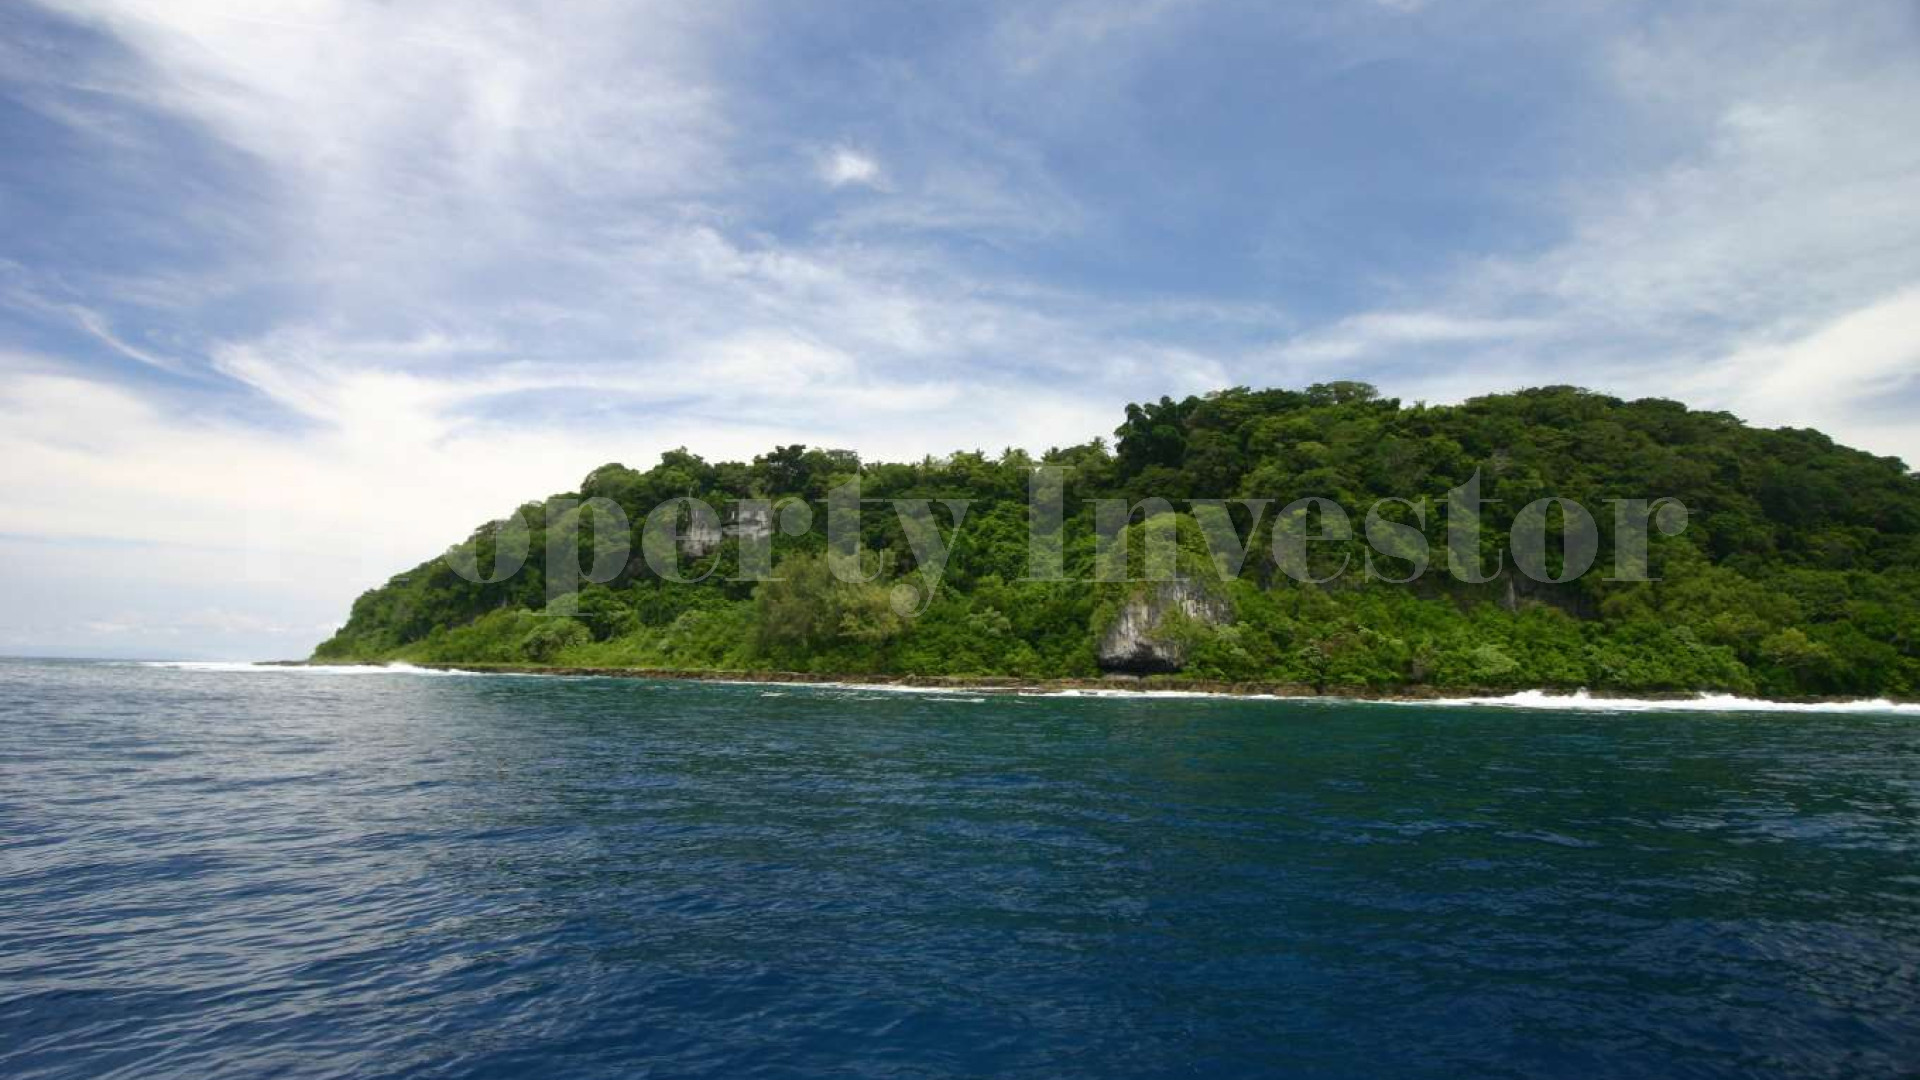 134 Hectare Virgin Island for Sale in Vanuatu